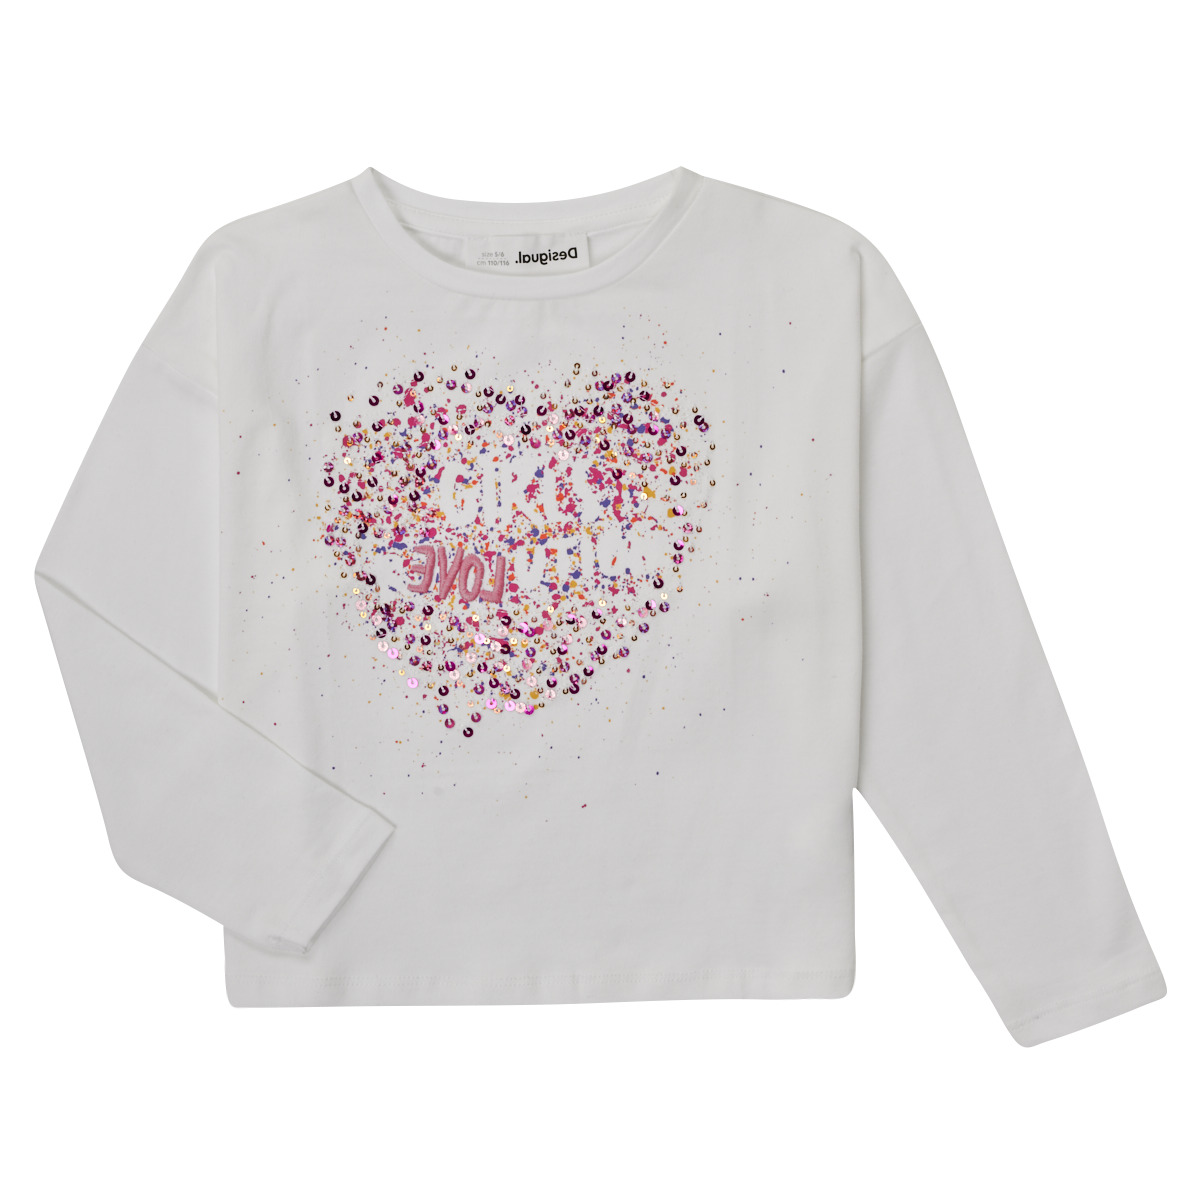 Textil Rapariga T-shirt mangas compridas Desigual ALBA Branco / Rosa